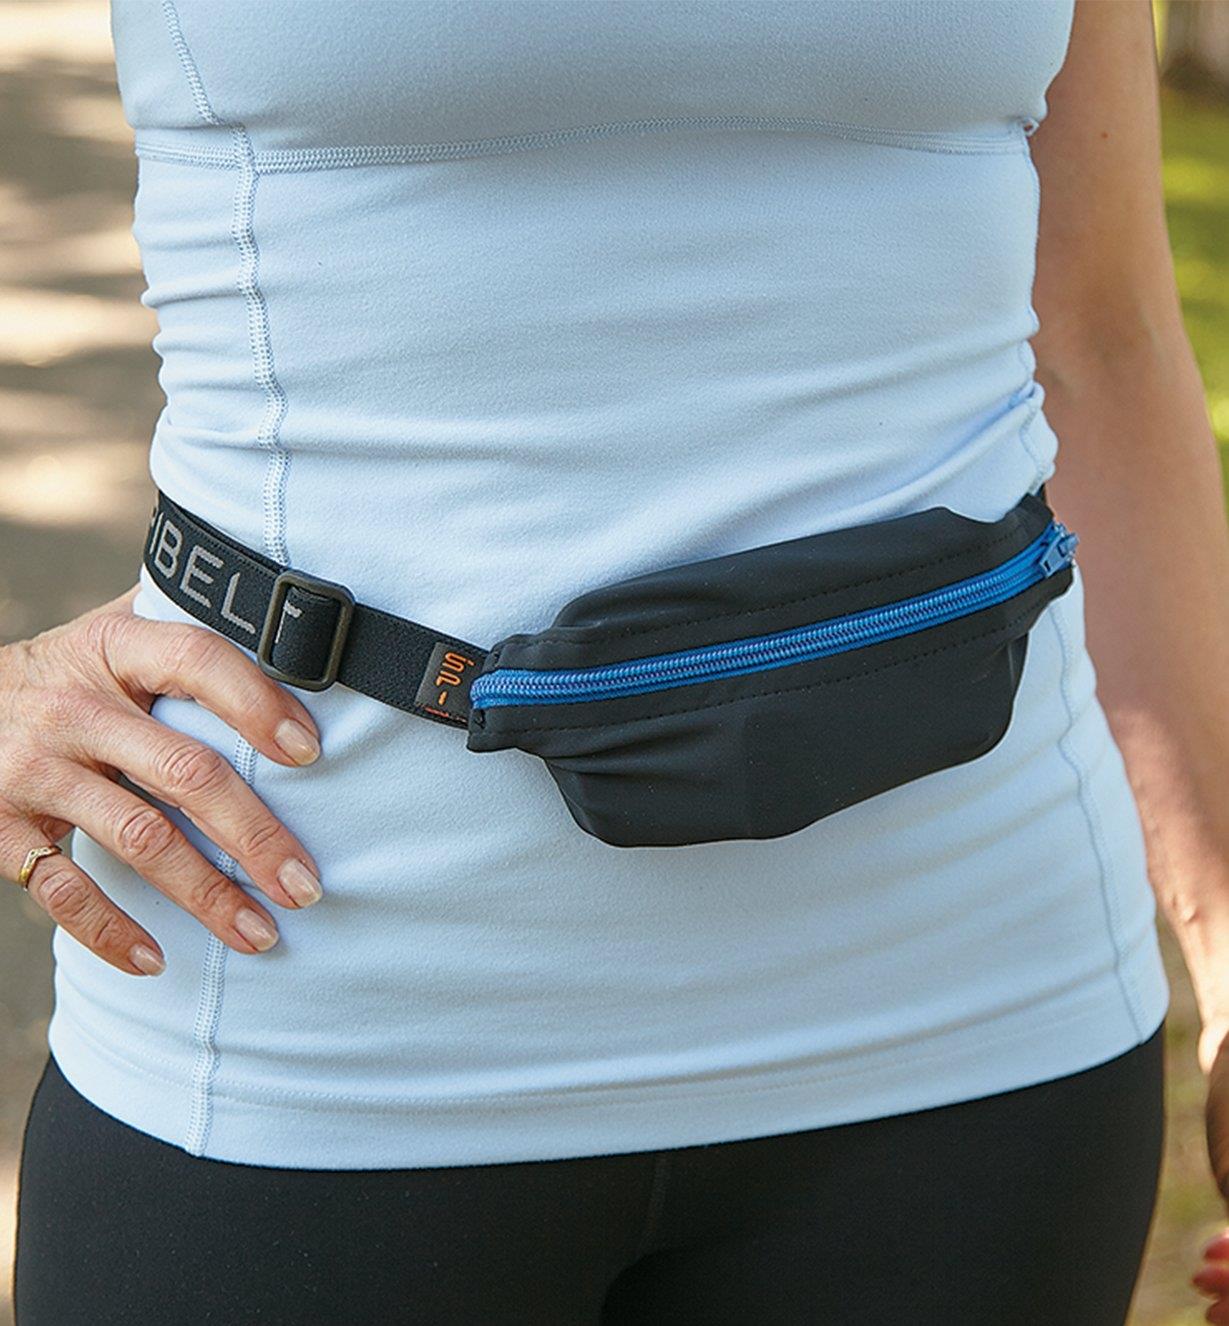 A woman wearing a black and blue pocket belt